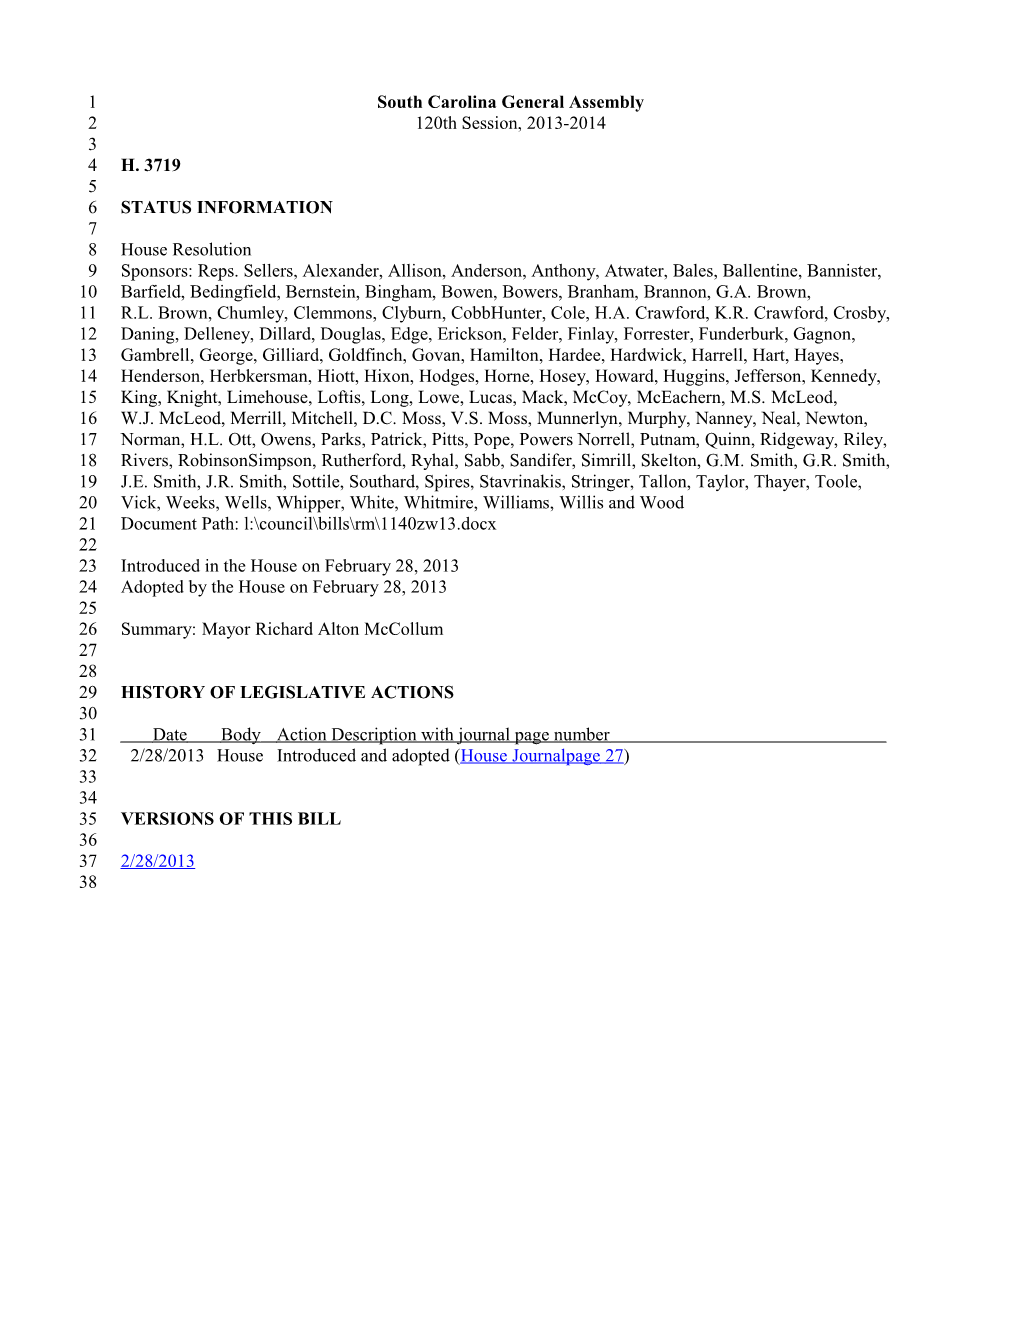 2013-2014 Bill 3719: Mayor Richard Alton Mccollum - South Carolina Legislature Online